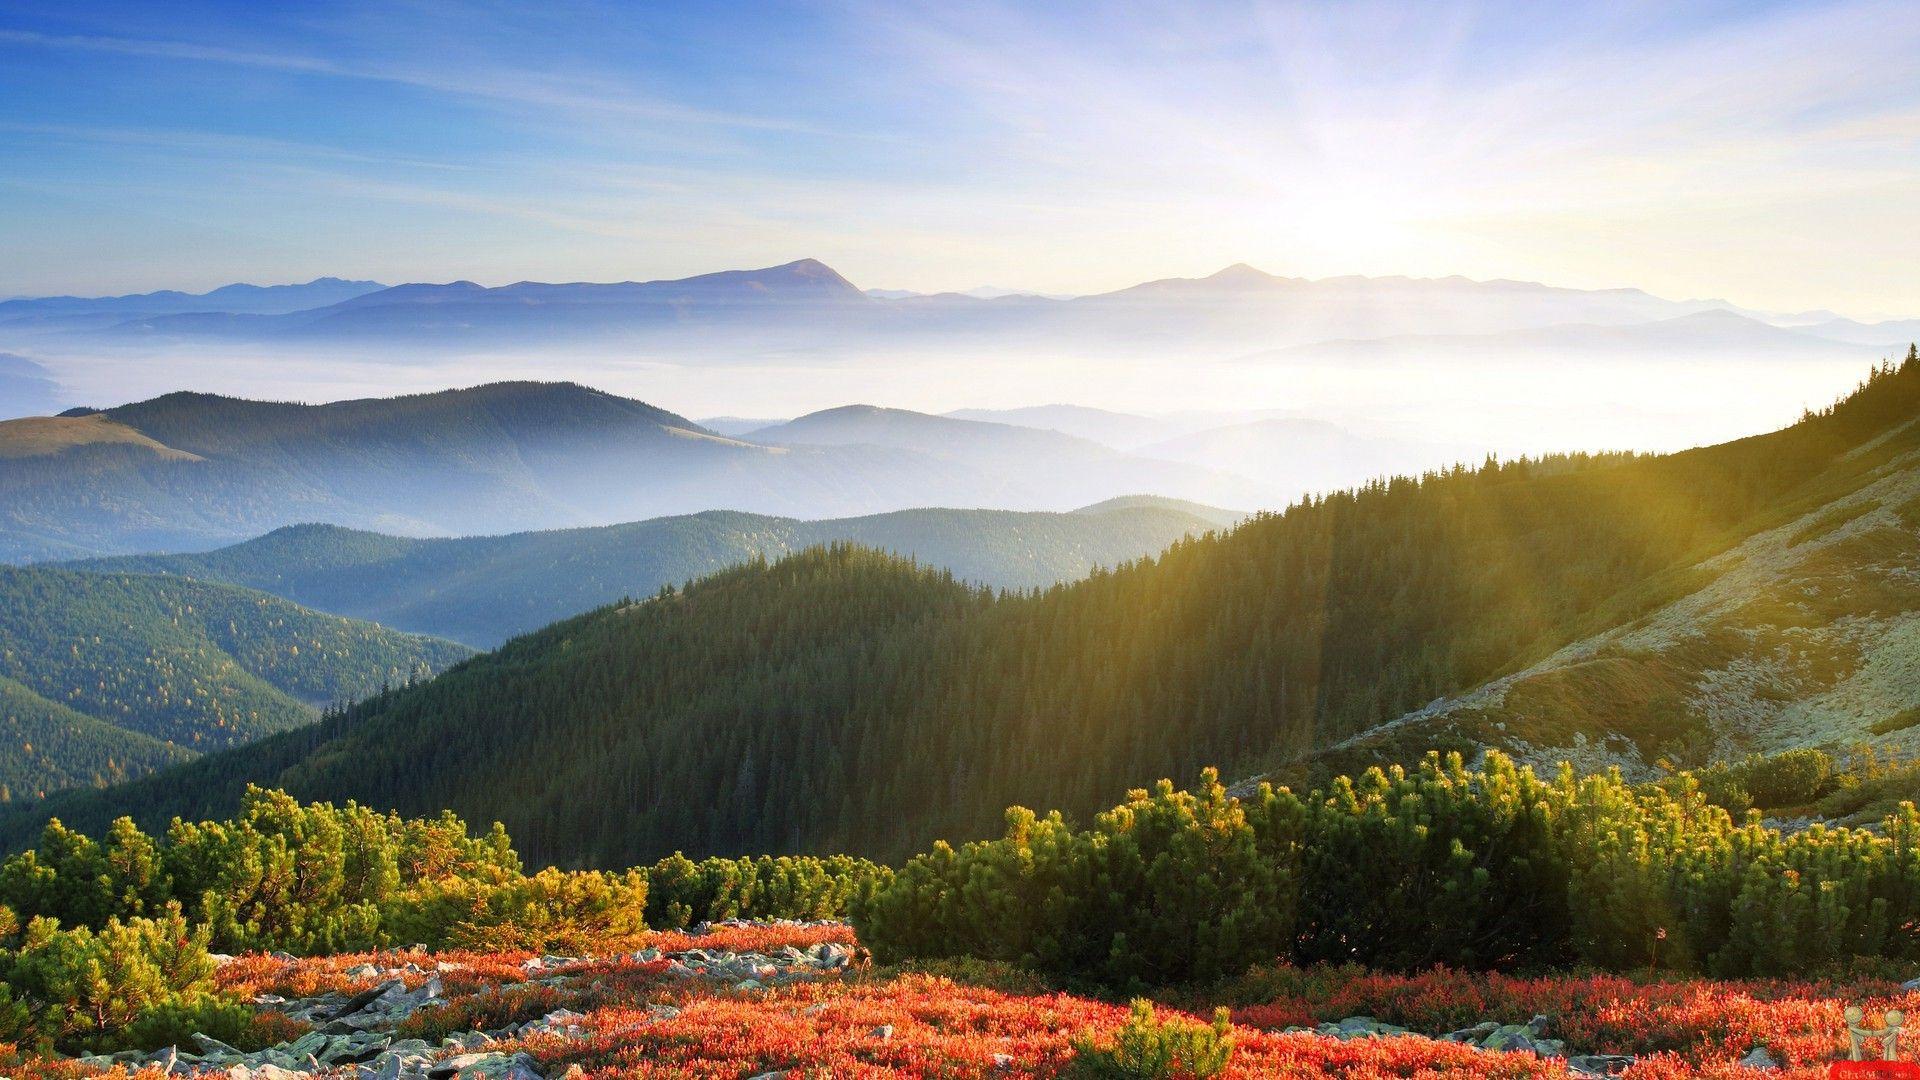 Top HD Smoky Mountains Wallpaper. Nature HD.43 KB